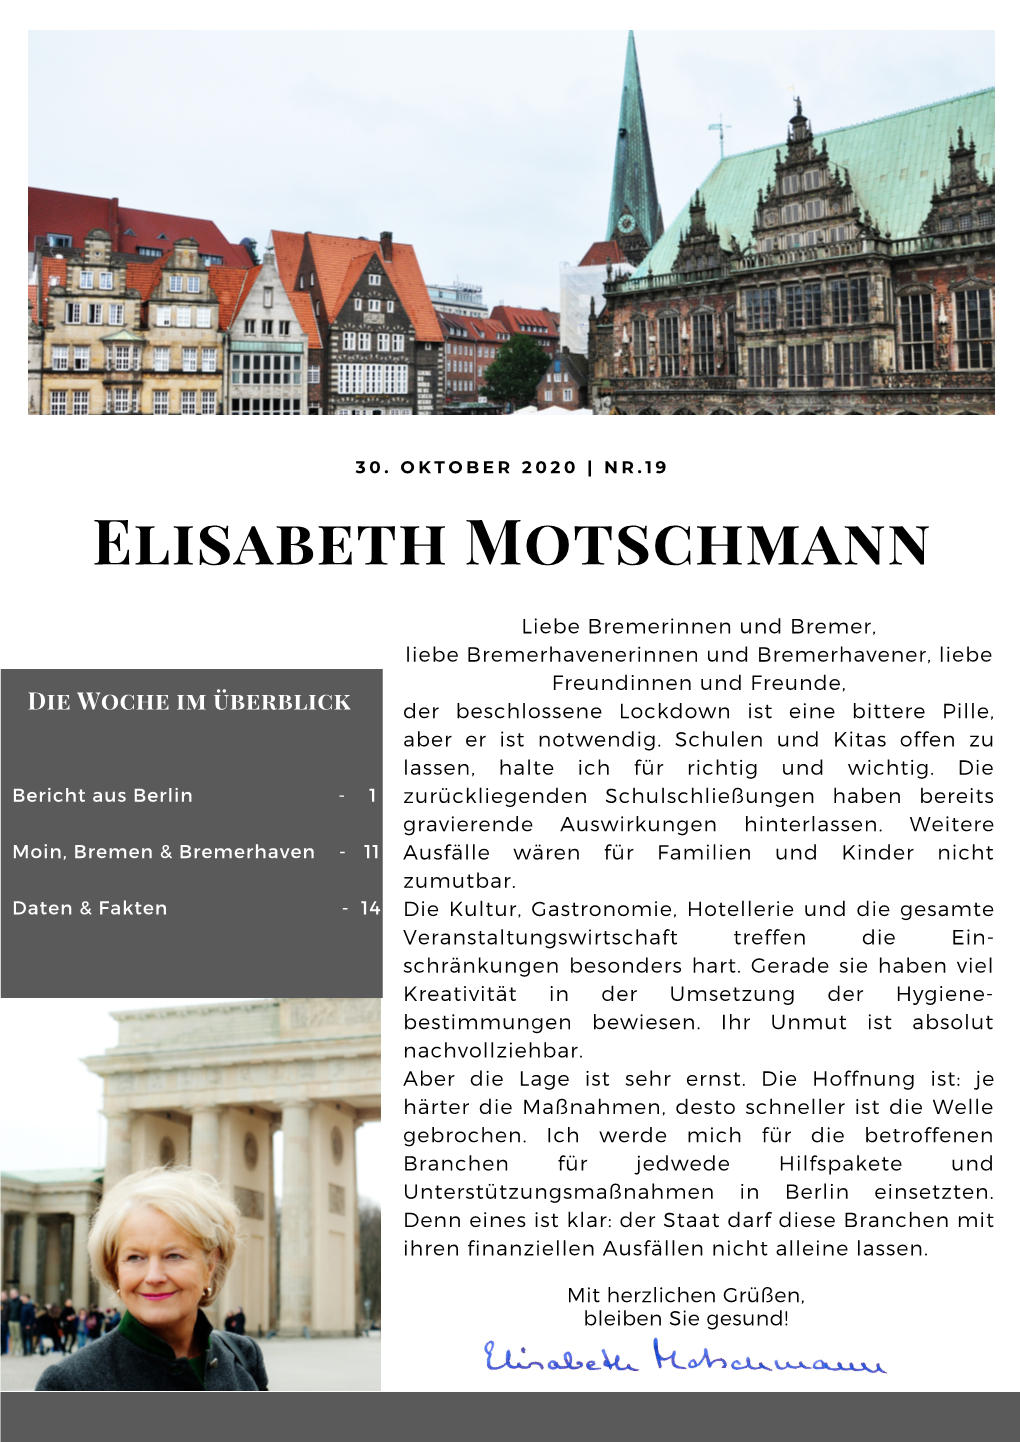 Elisabeth Motschmann